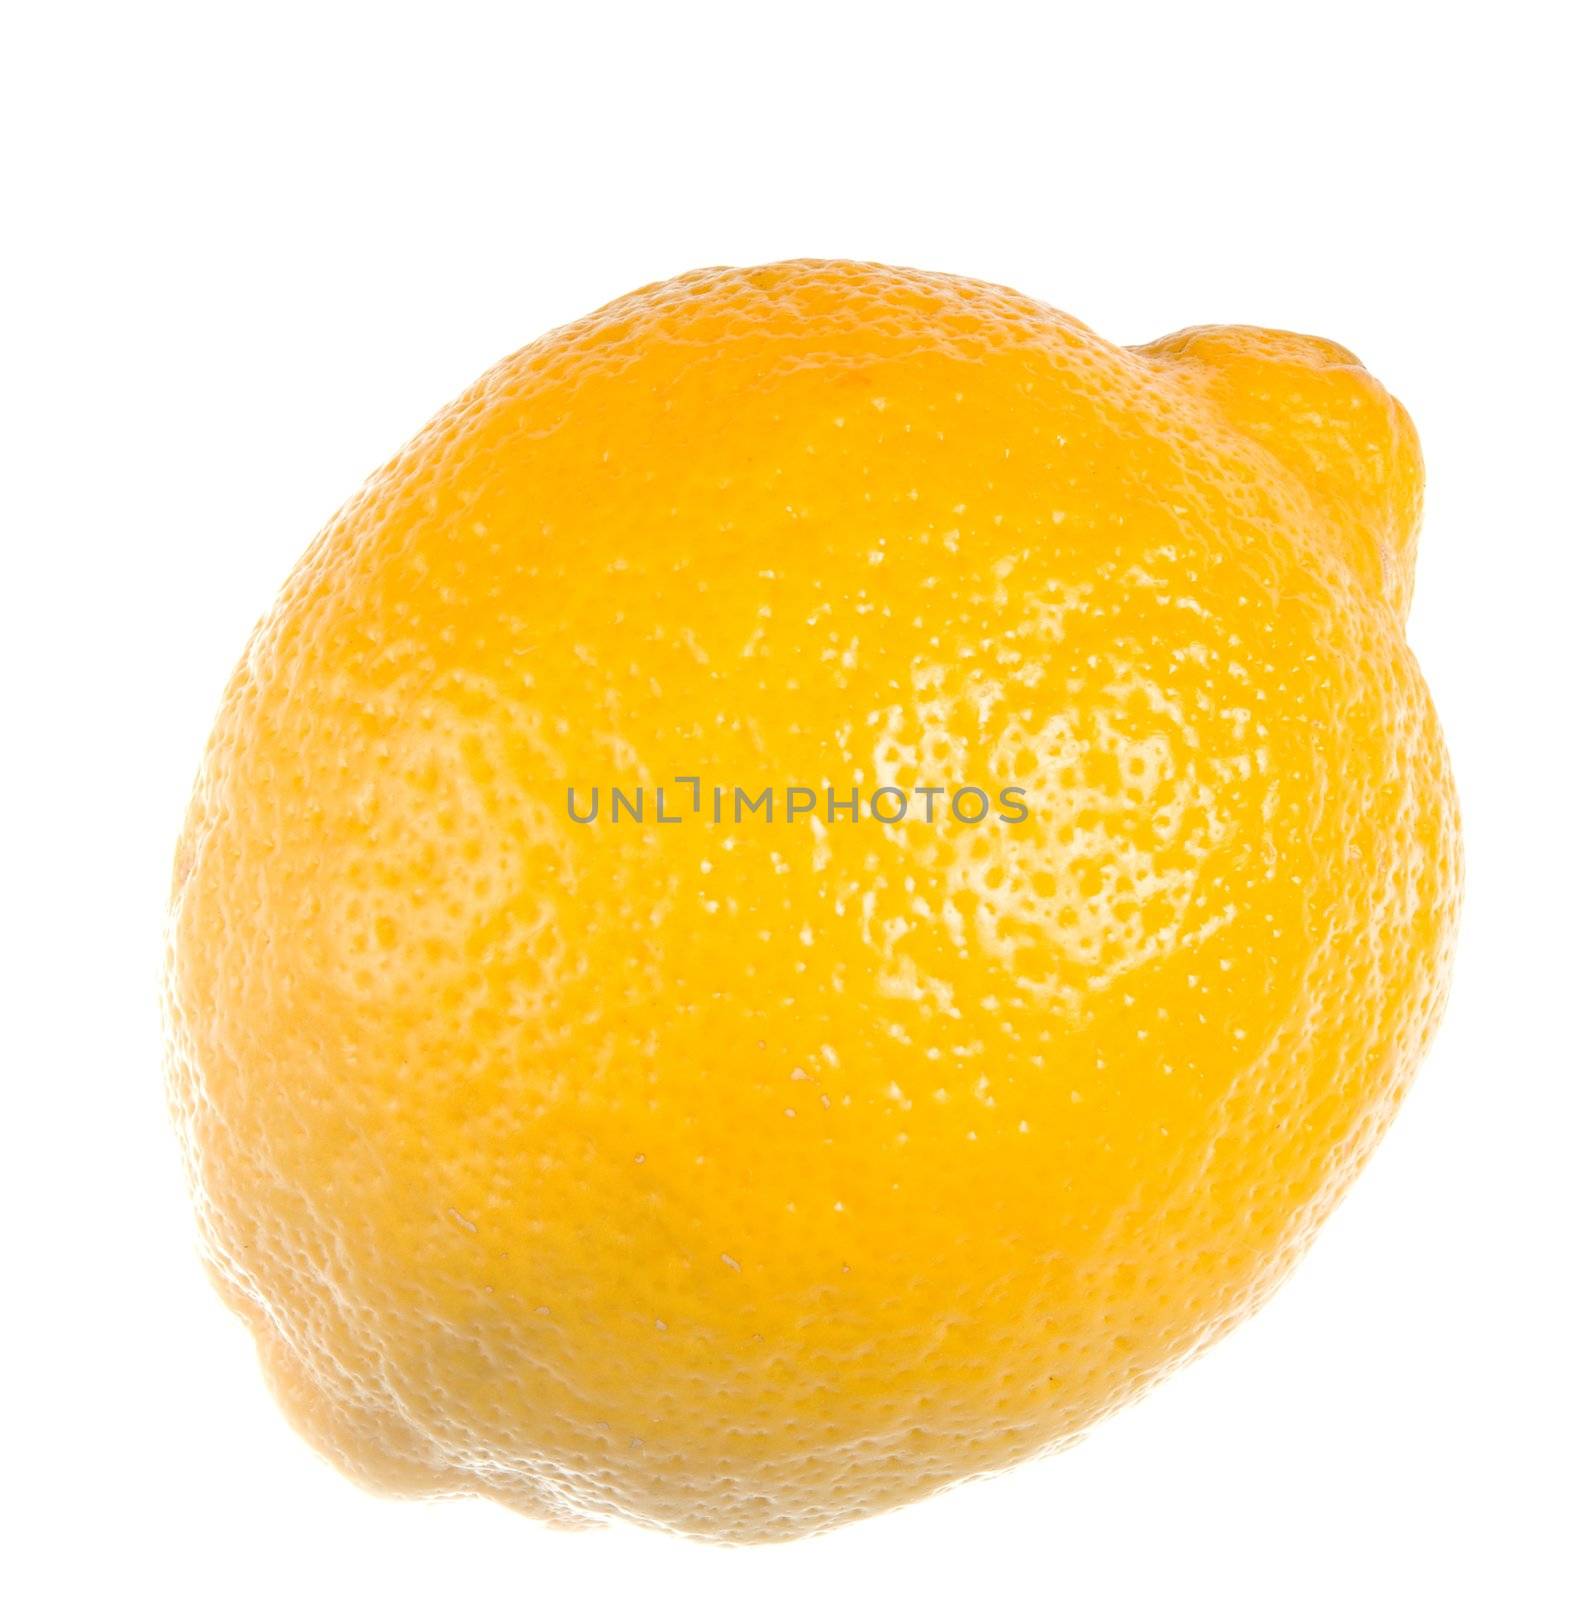  lemon. Object on a white background